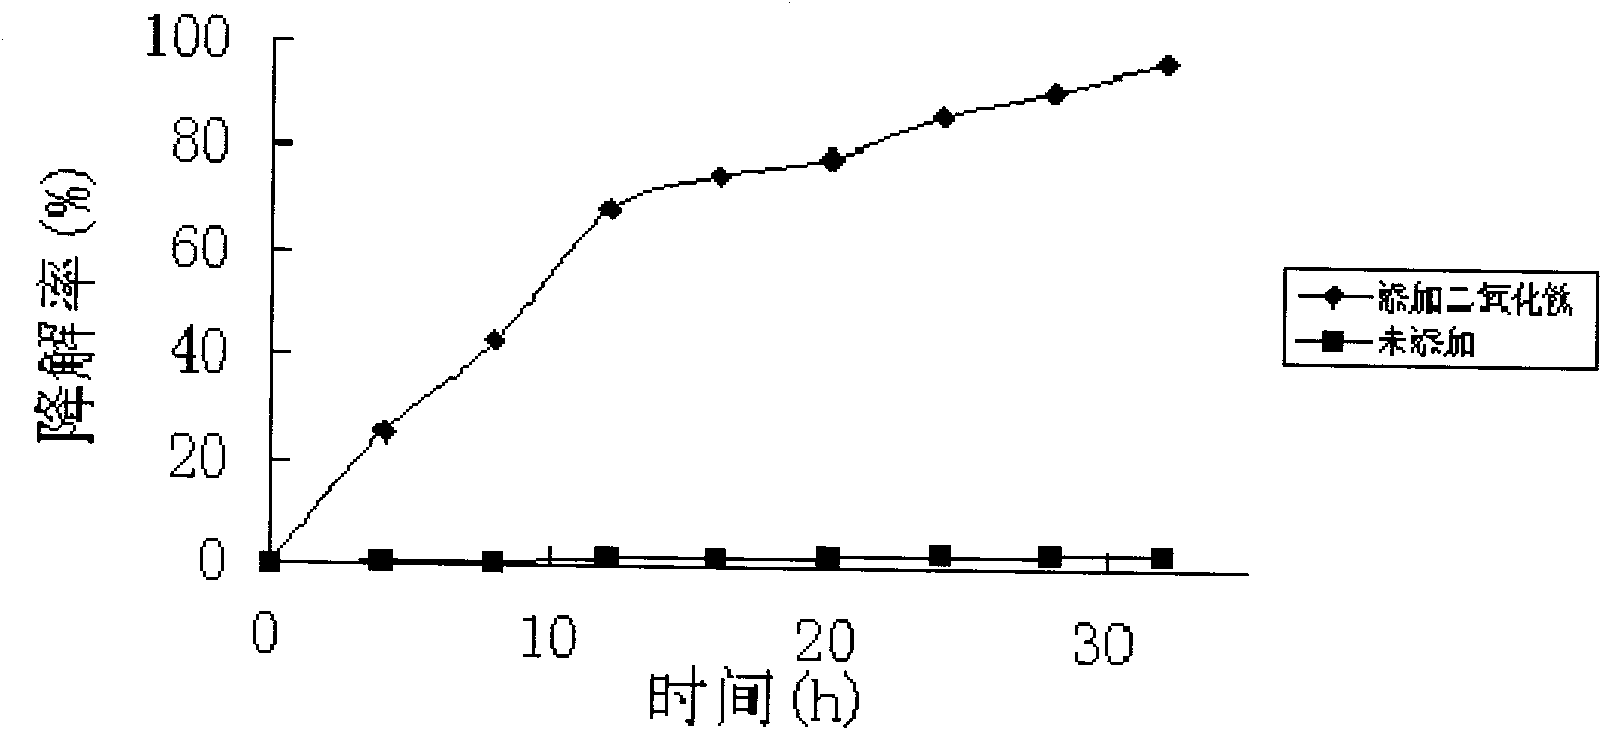 Preparation method for preparing titanium dioxide photochemical catalyst by ionic liquid